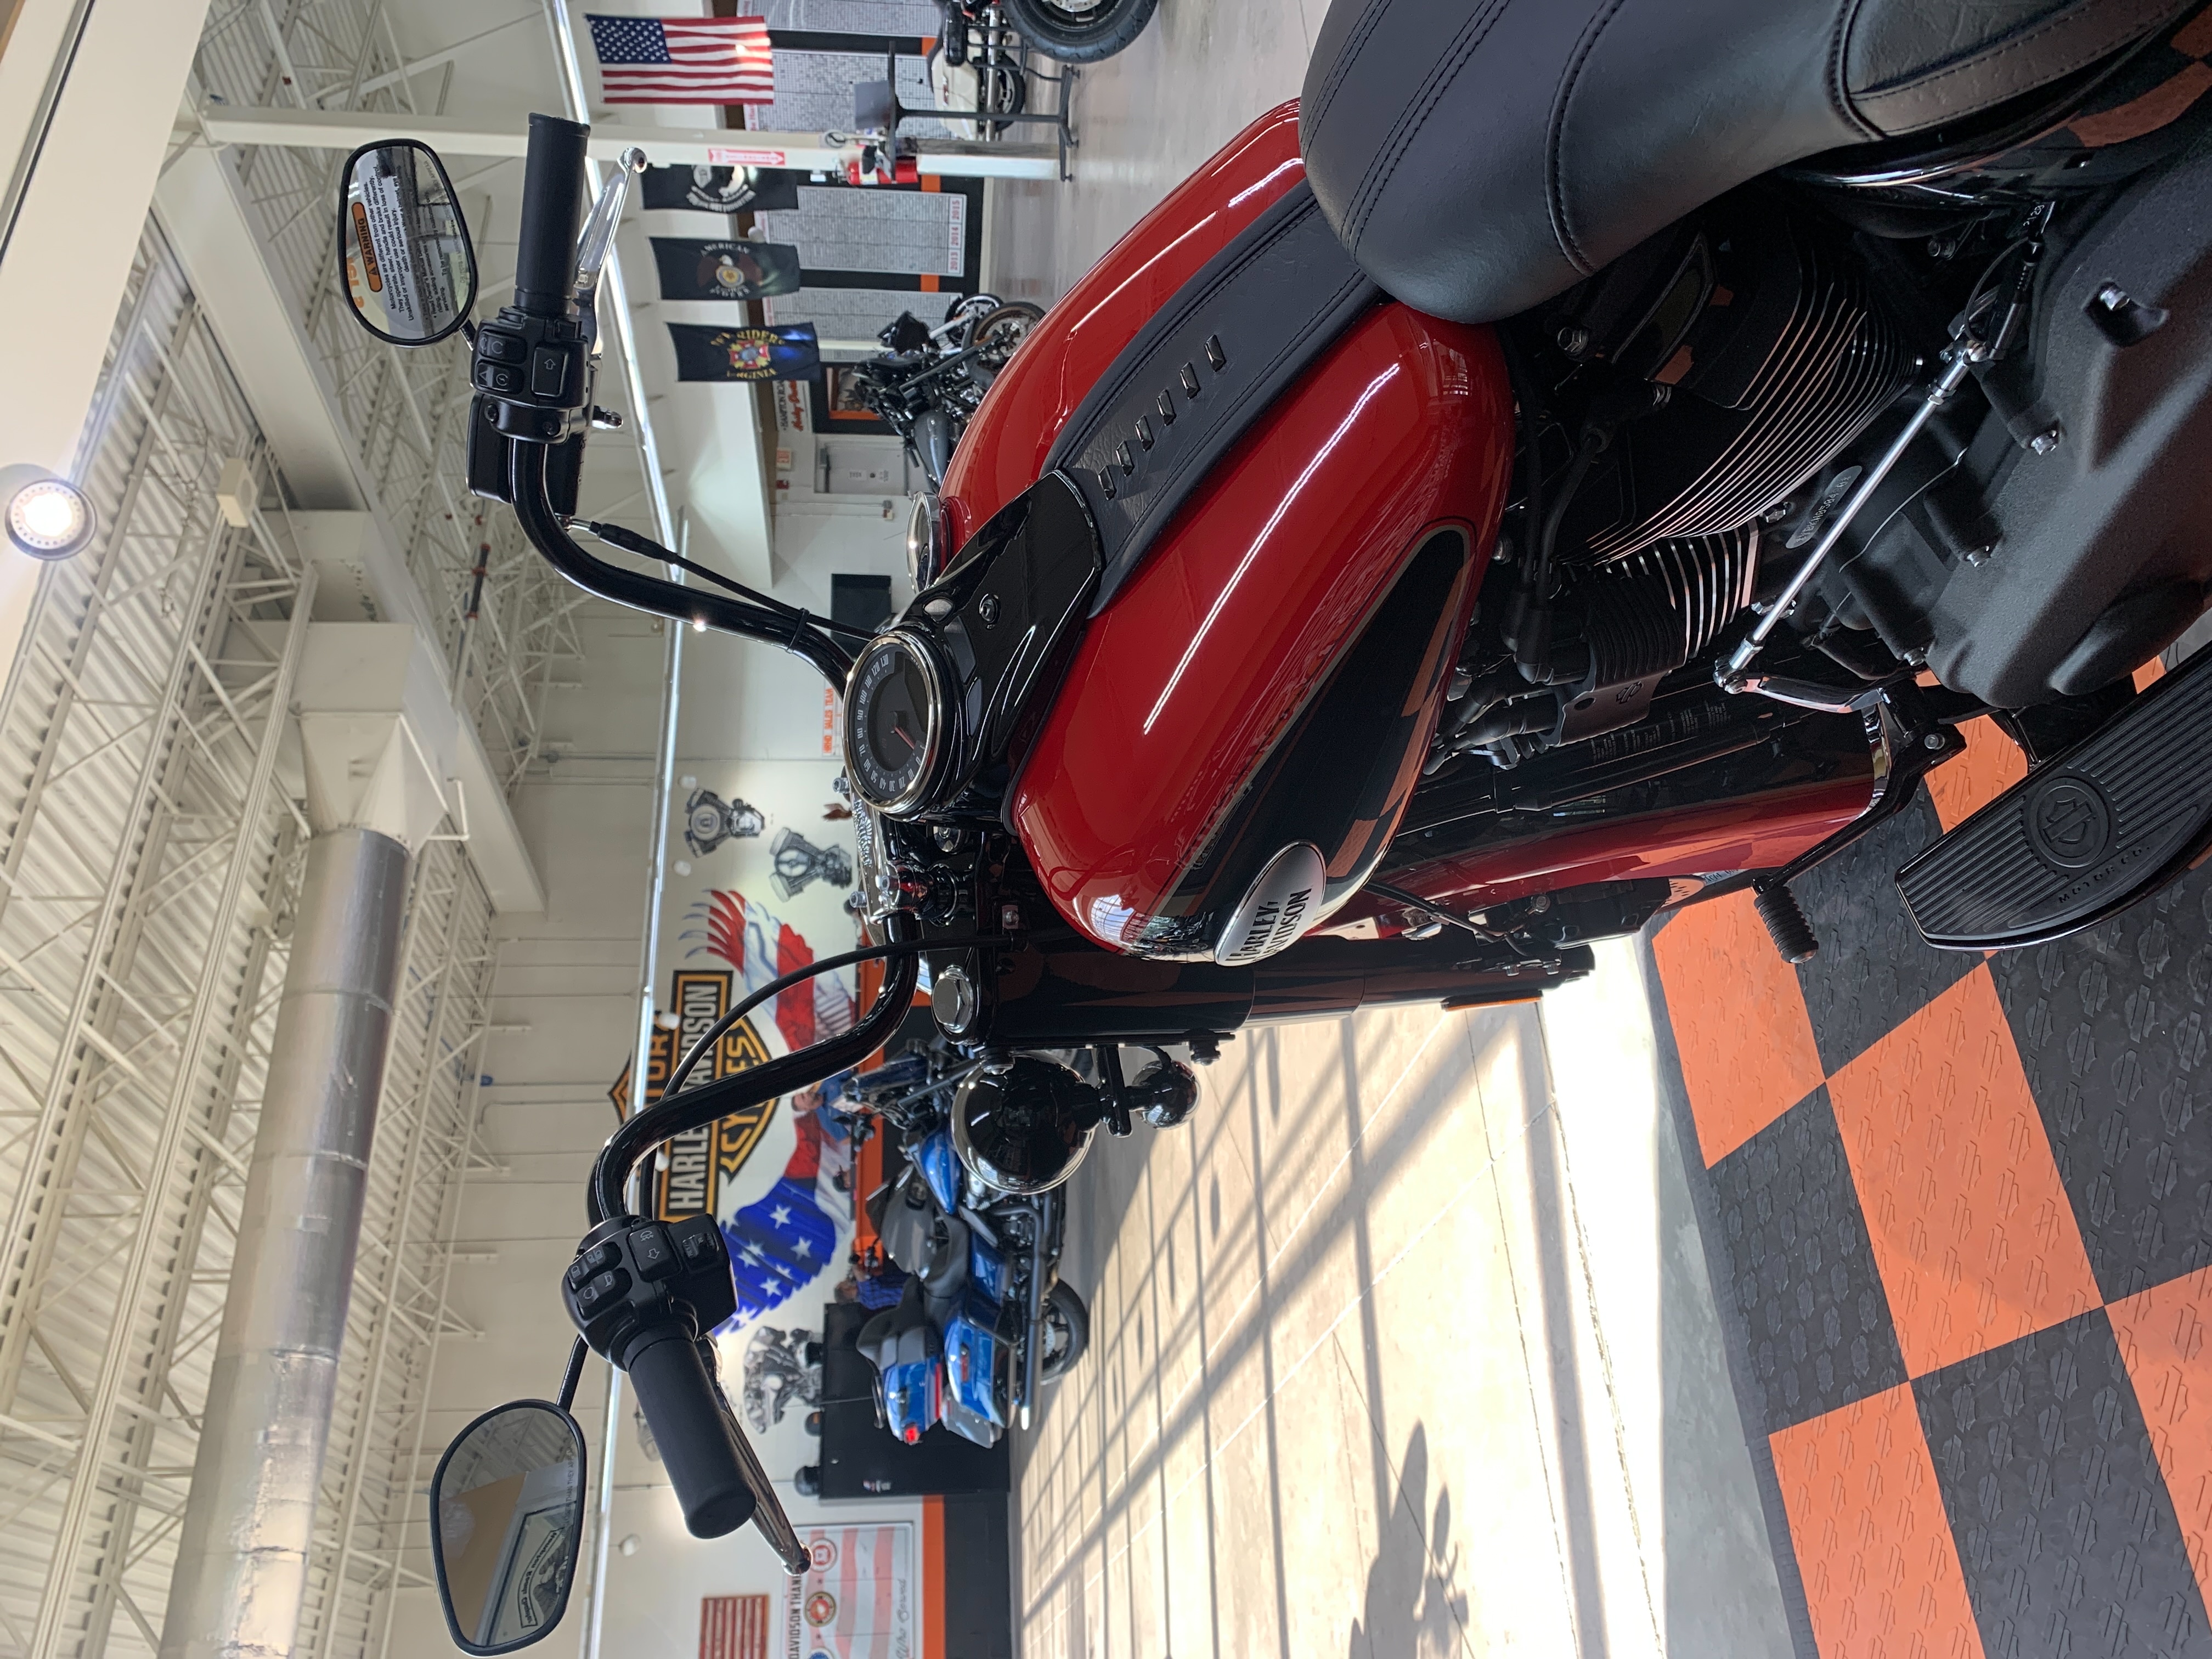 2022 Harley-Davidson Softail Heritage Classic at Hampton Roads Harley-Davidson